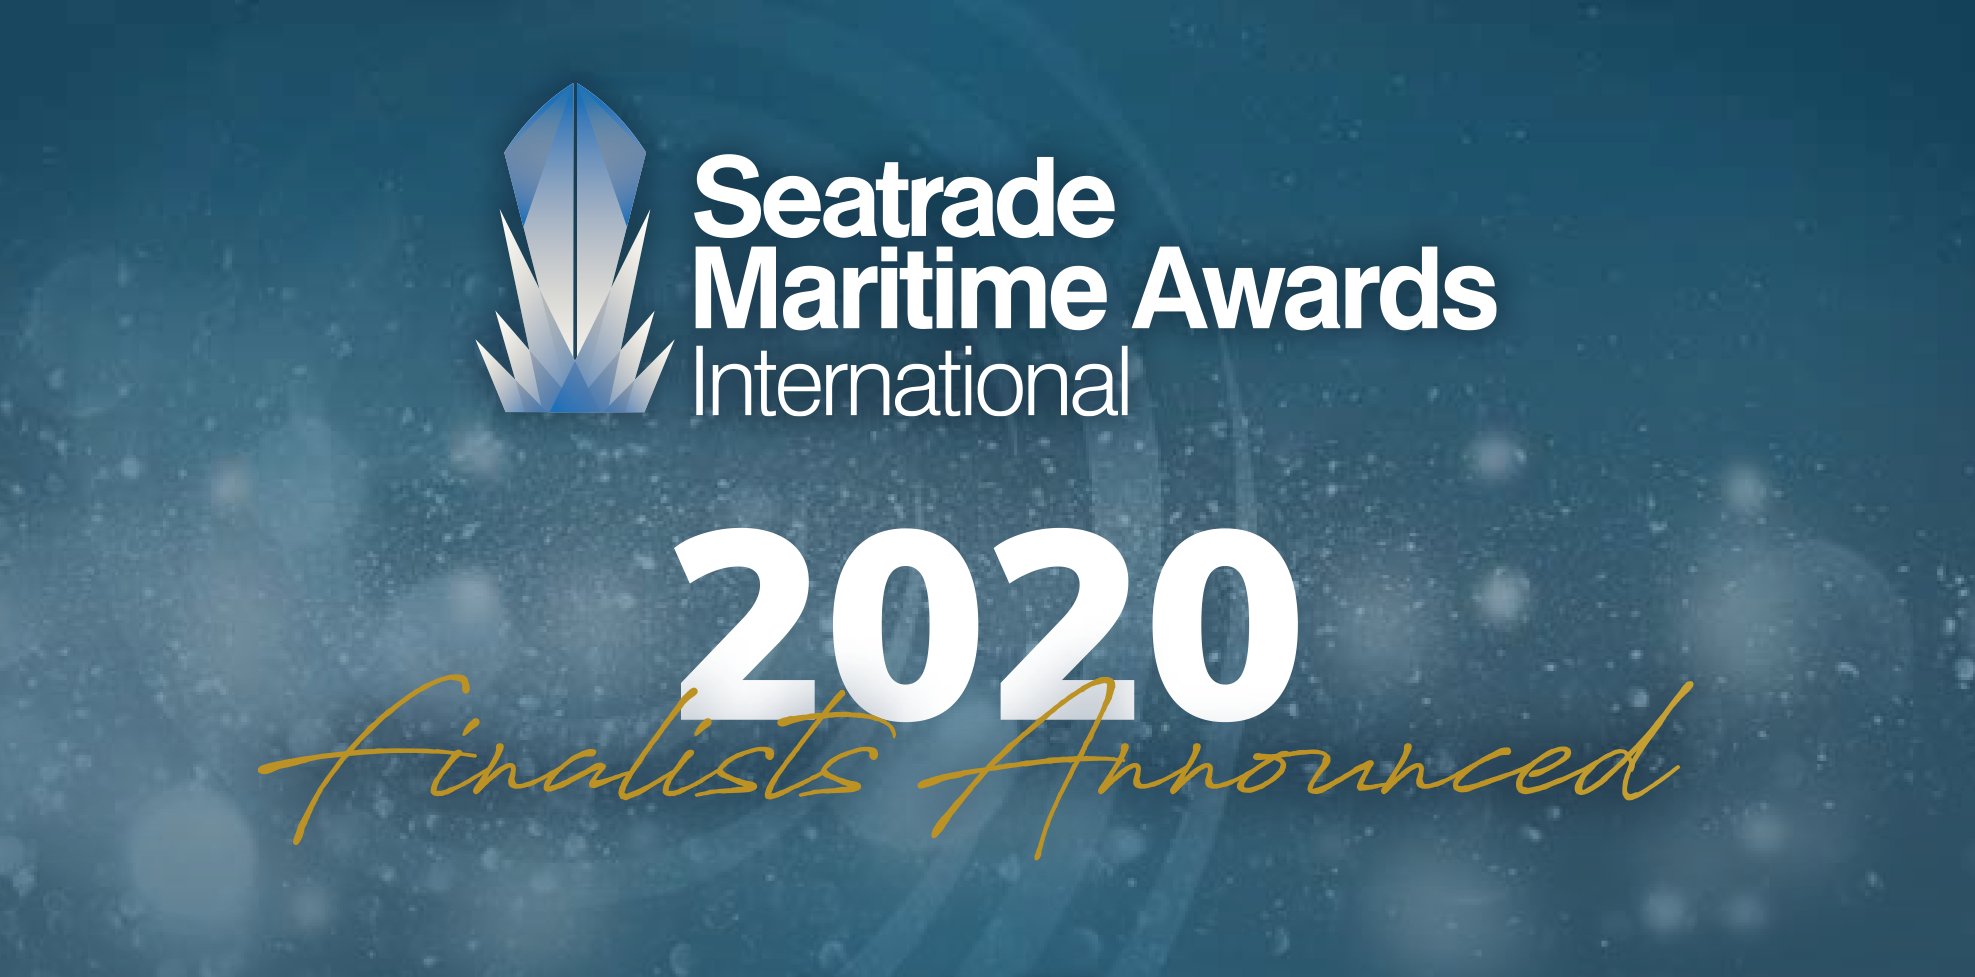 Seatrade Maritime Awards International 2020 Finalists